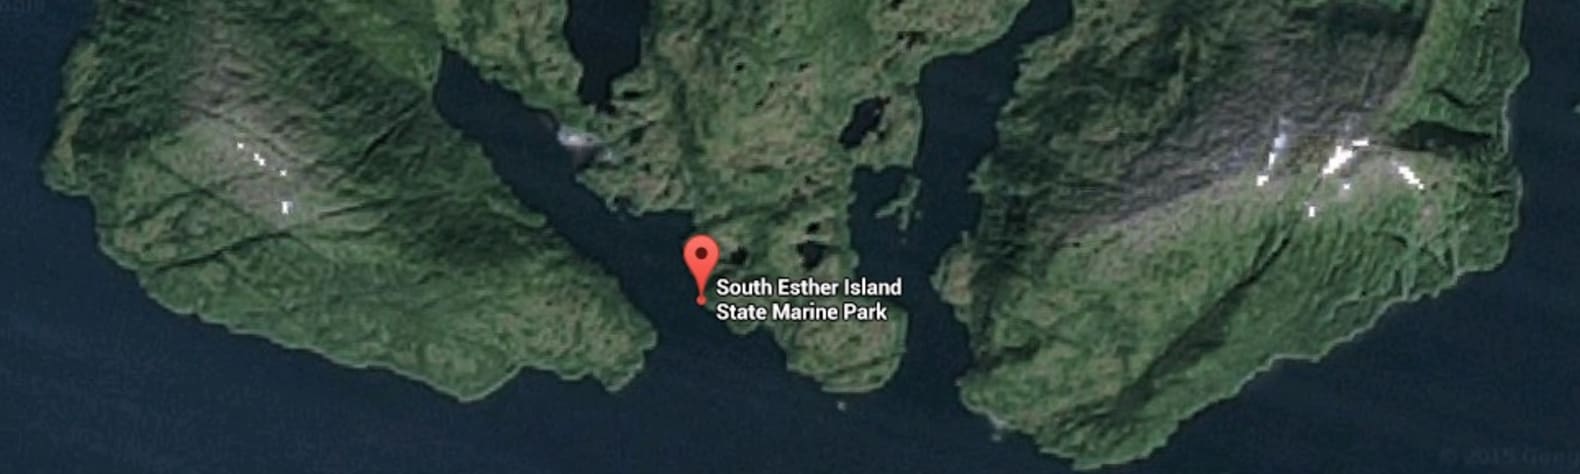 South Esther Island State Marine Park